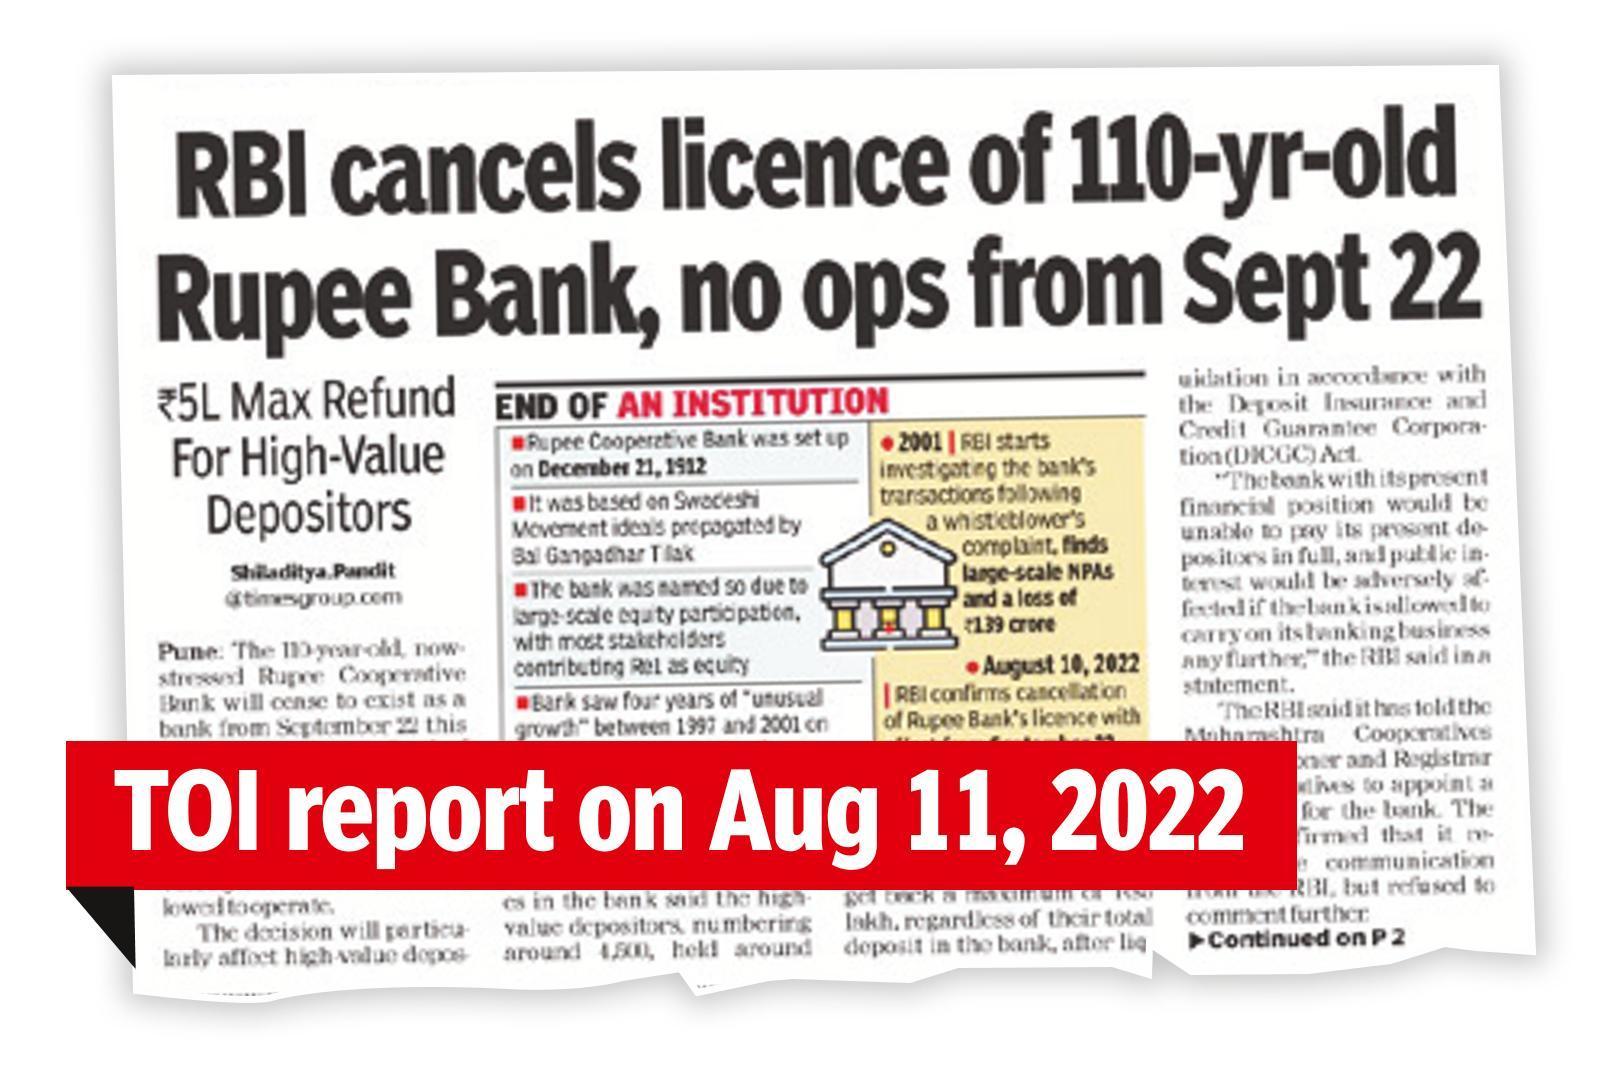 Rupee Bank administrators to seek legal advice over RBI nix